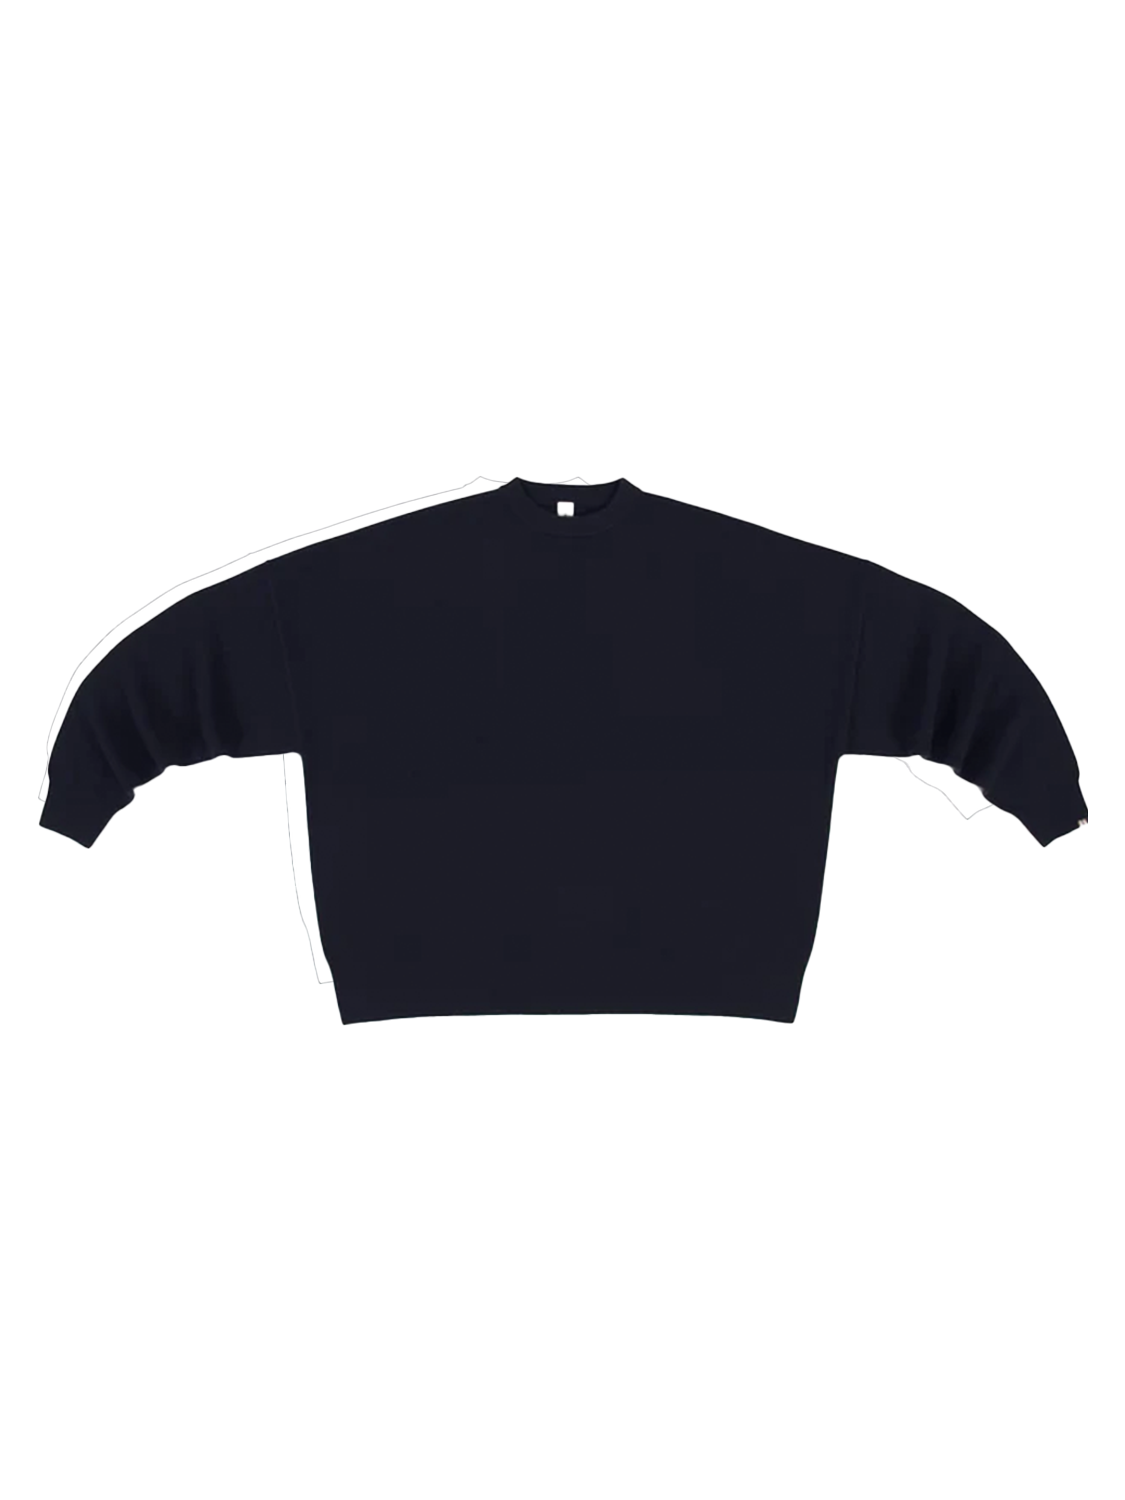 N°246 Juna – Oversized cashmere sweater 